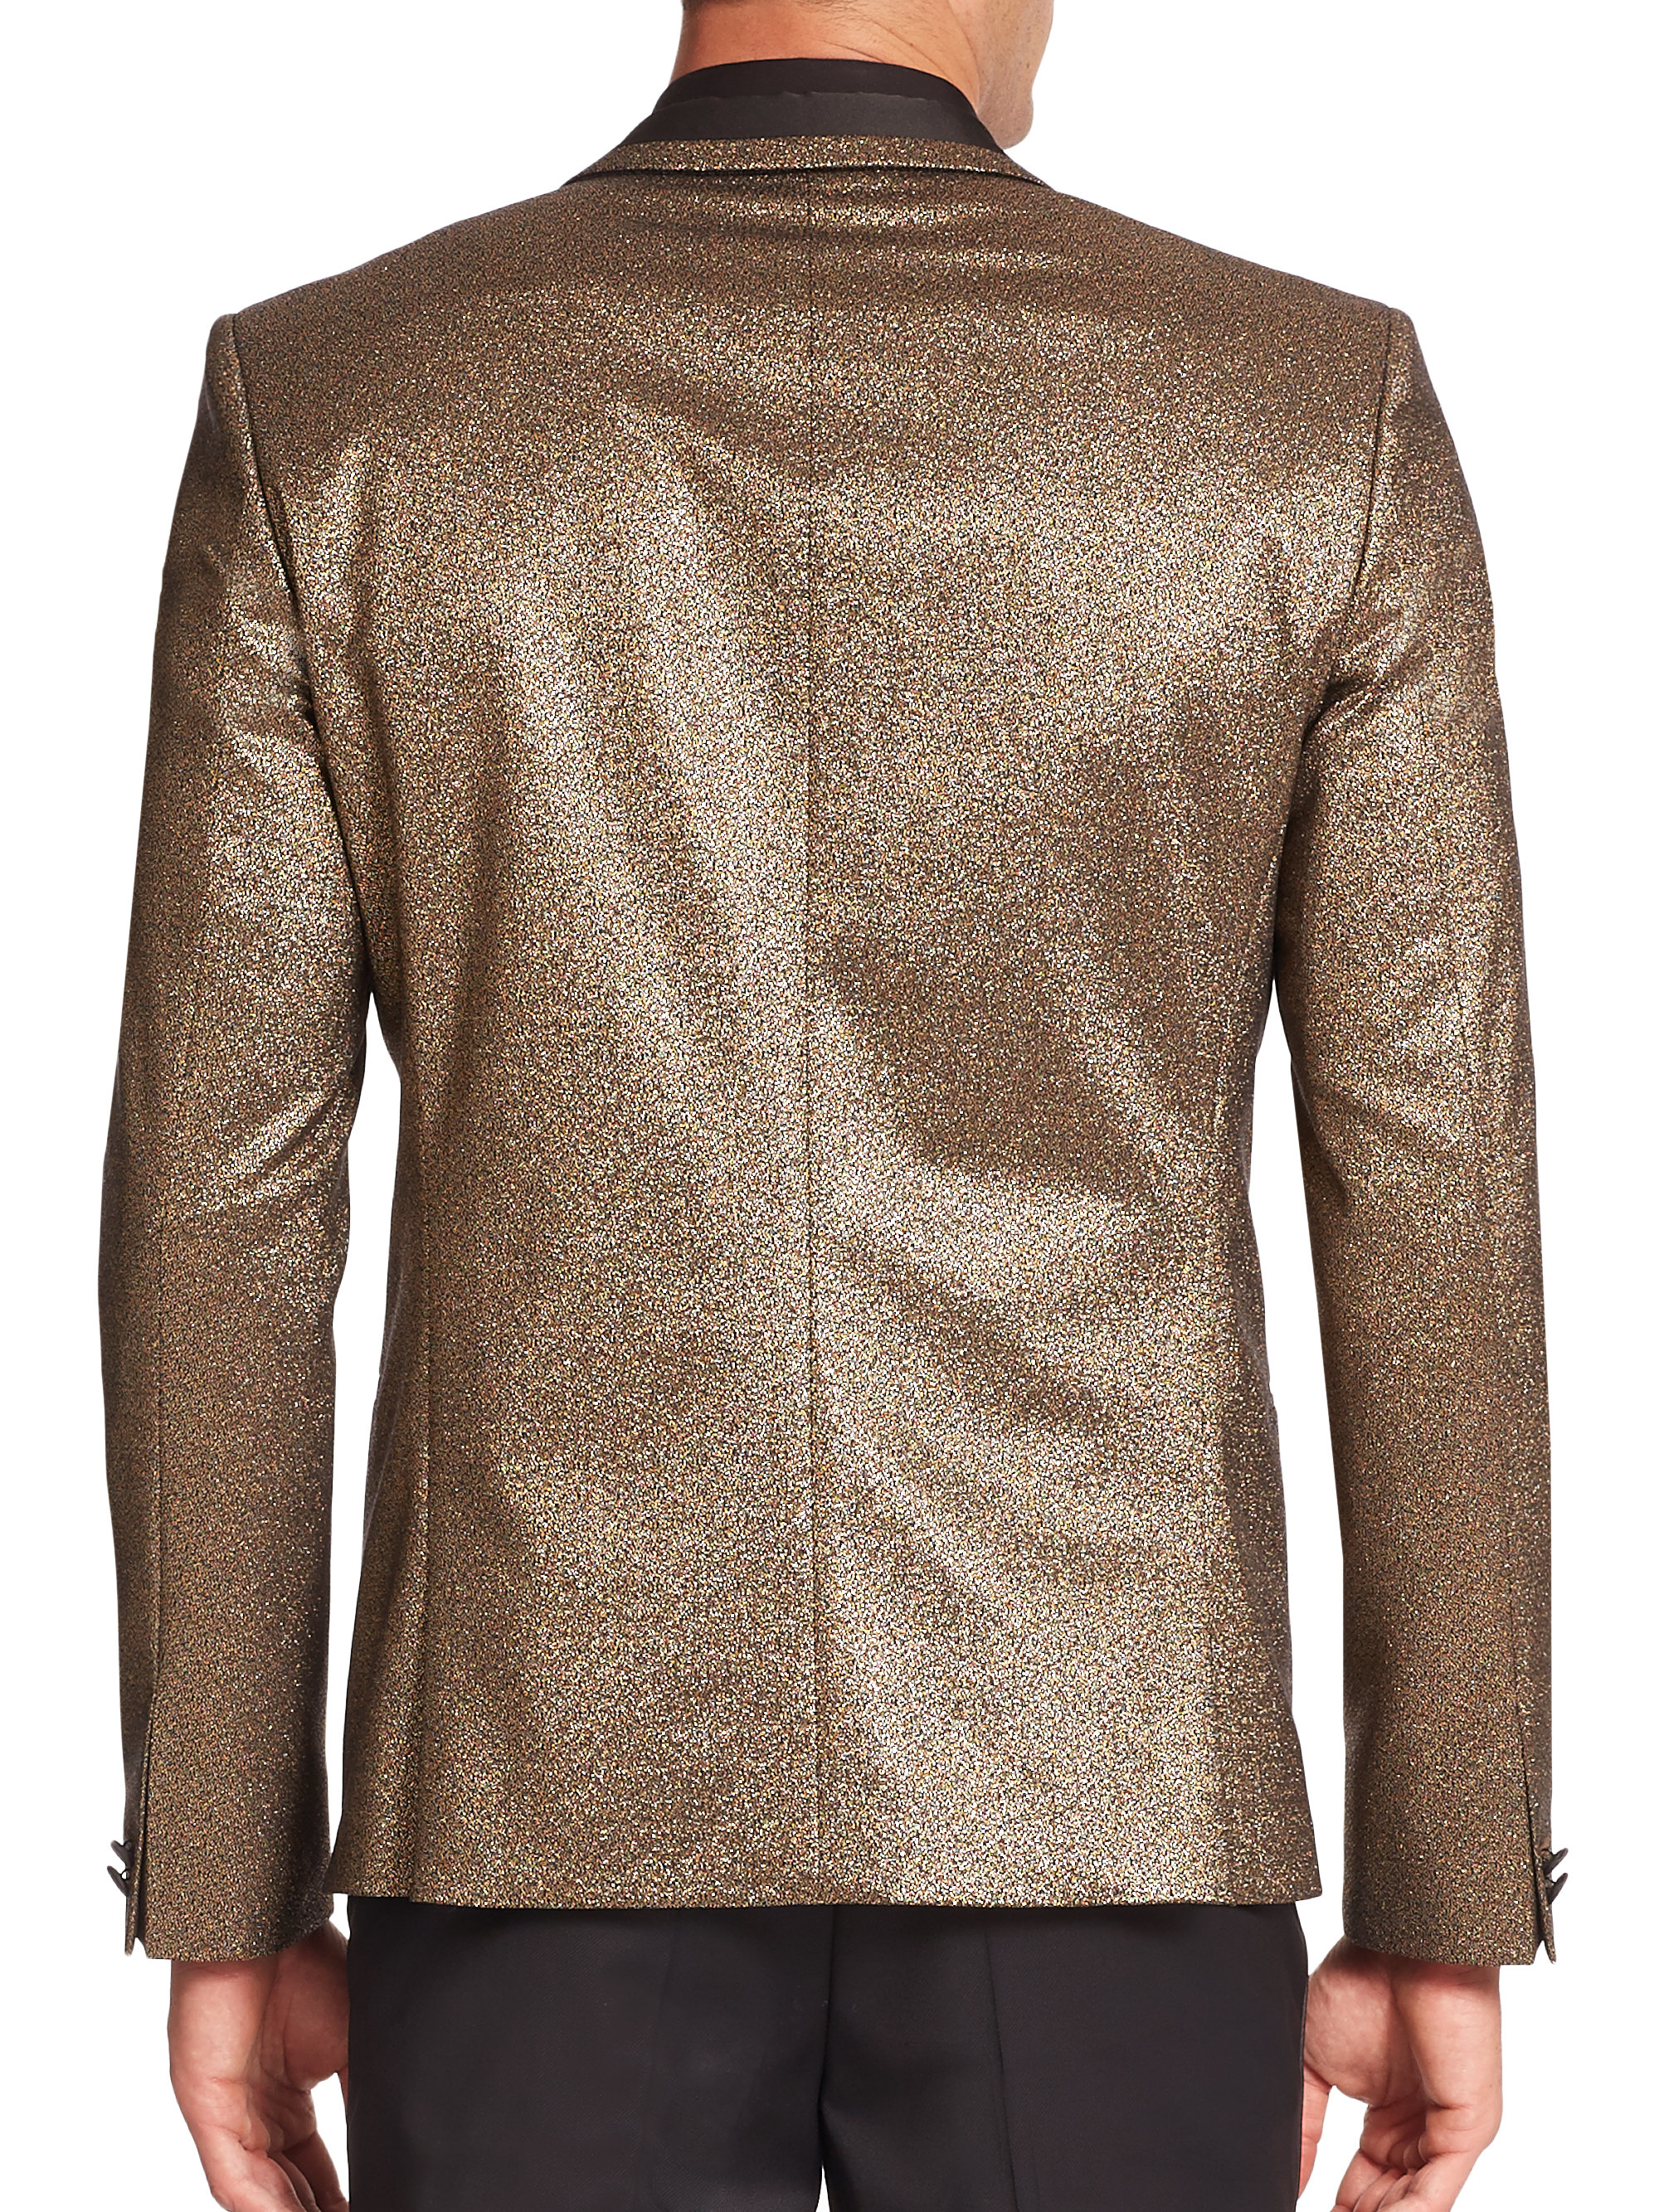 BOSS Adisson Glitter Tuxedo Jacket in Gold (Metallic) for Men - Lyst